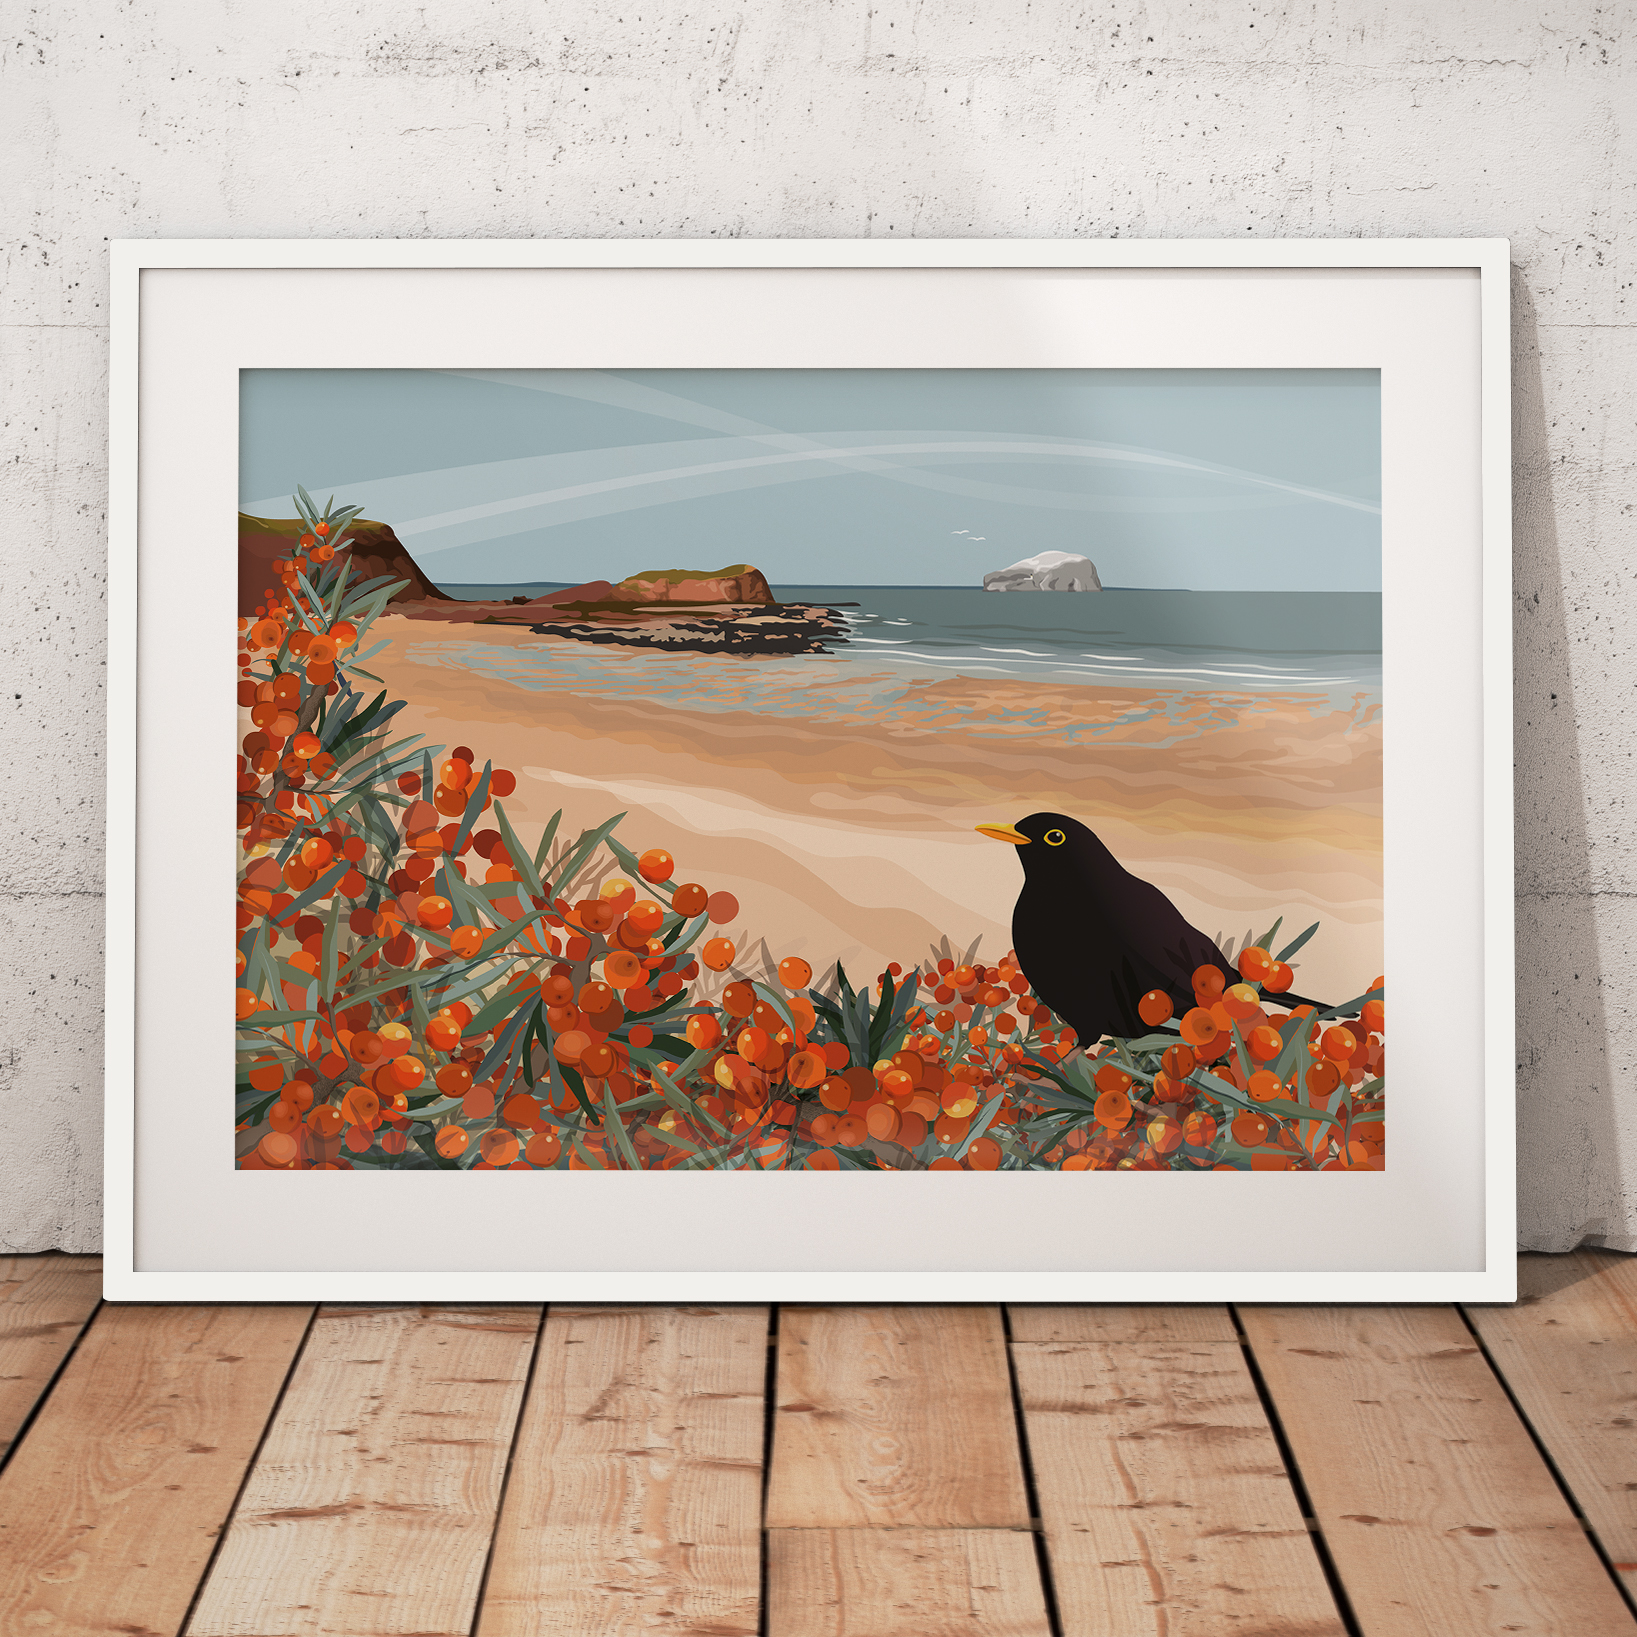 Blackbird and sea buckthorn, Seacliff by Helen Wyllie